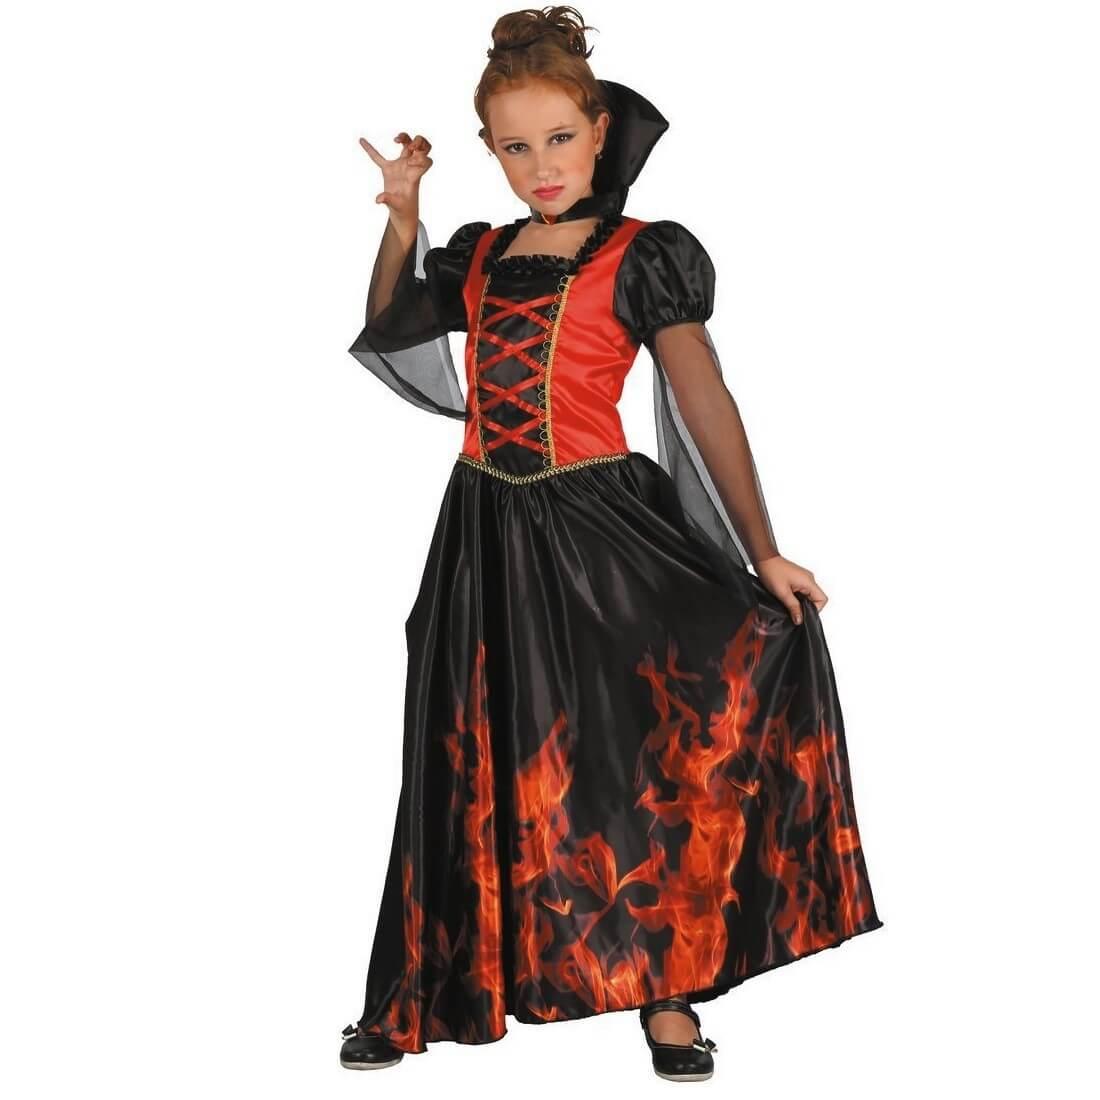 91218 age 7 9 ans costume deguisement fille halloween vampiresse flamboyante